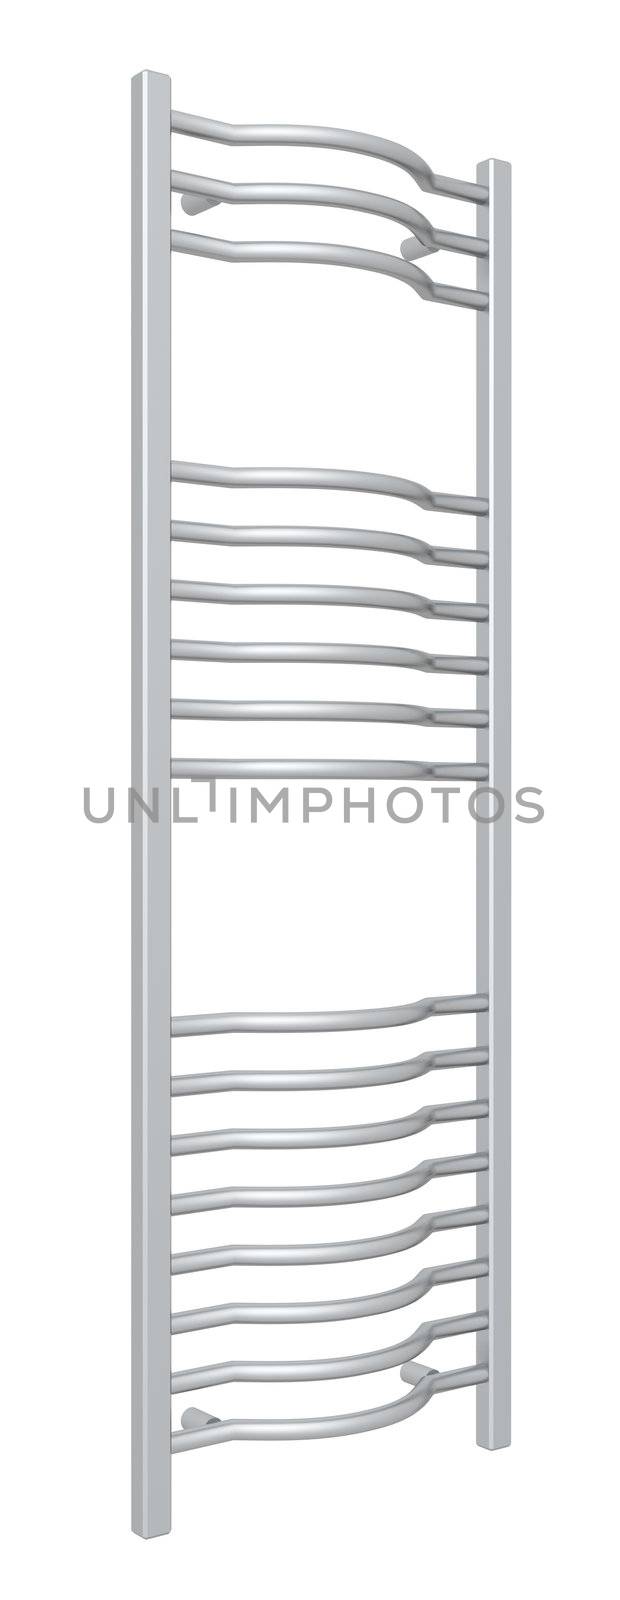 Standing chrome towel holder rack and rails by Morphart